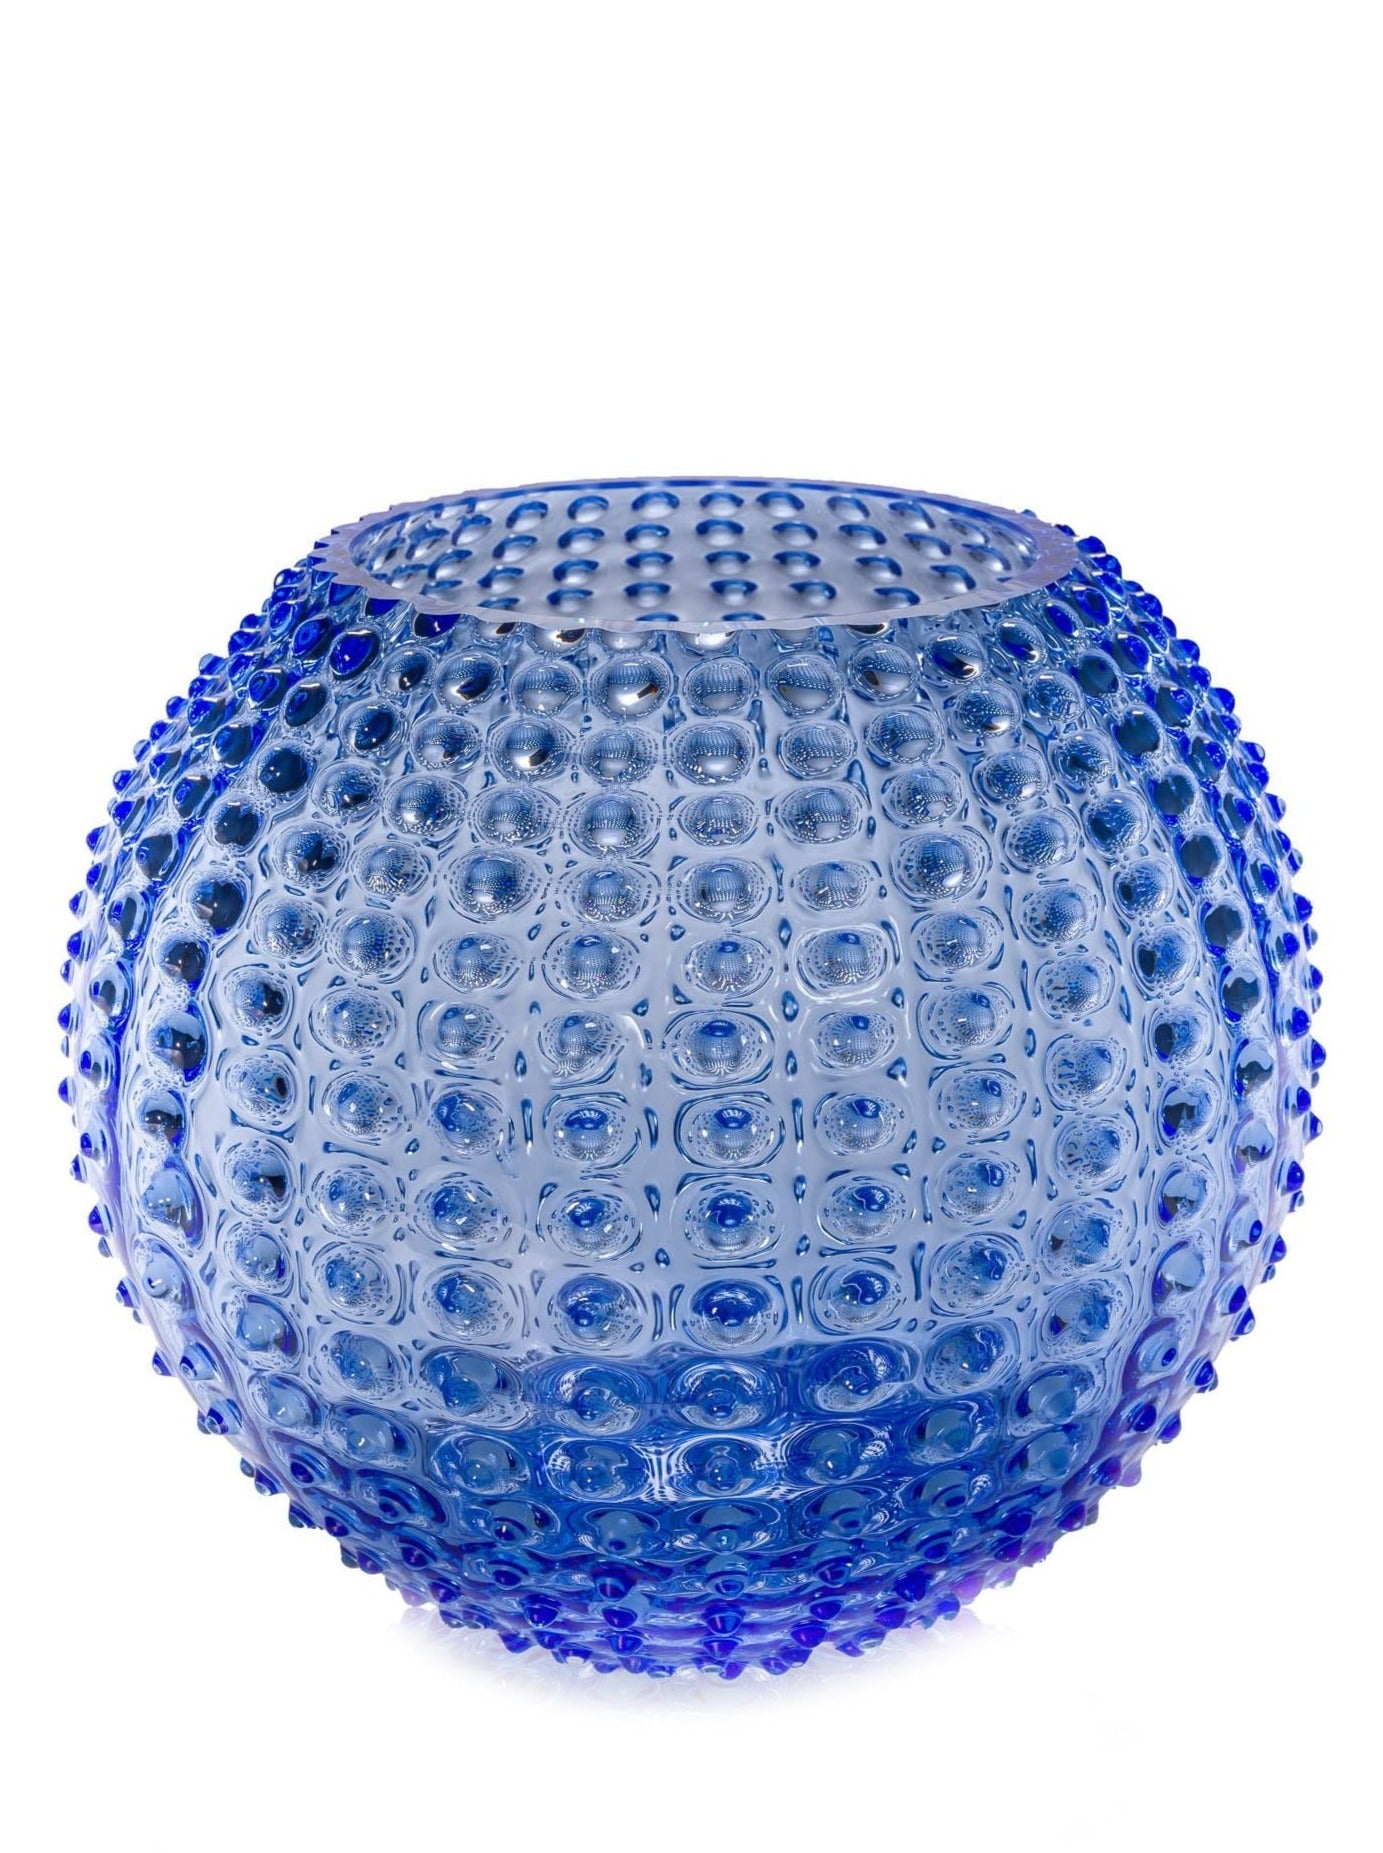 Light blue Hobnail Globe vase, large